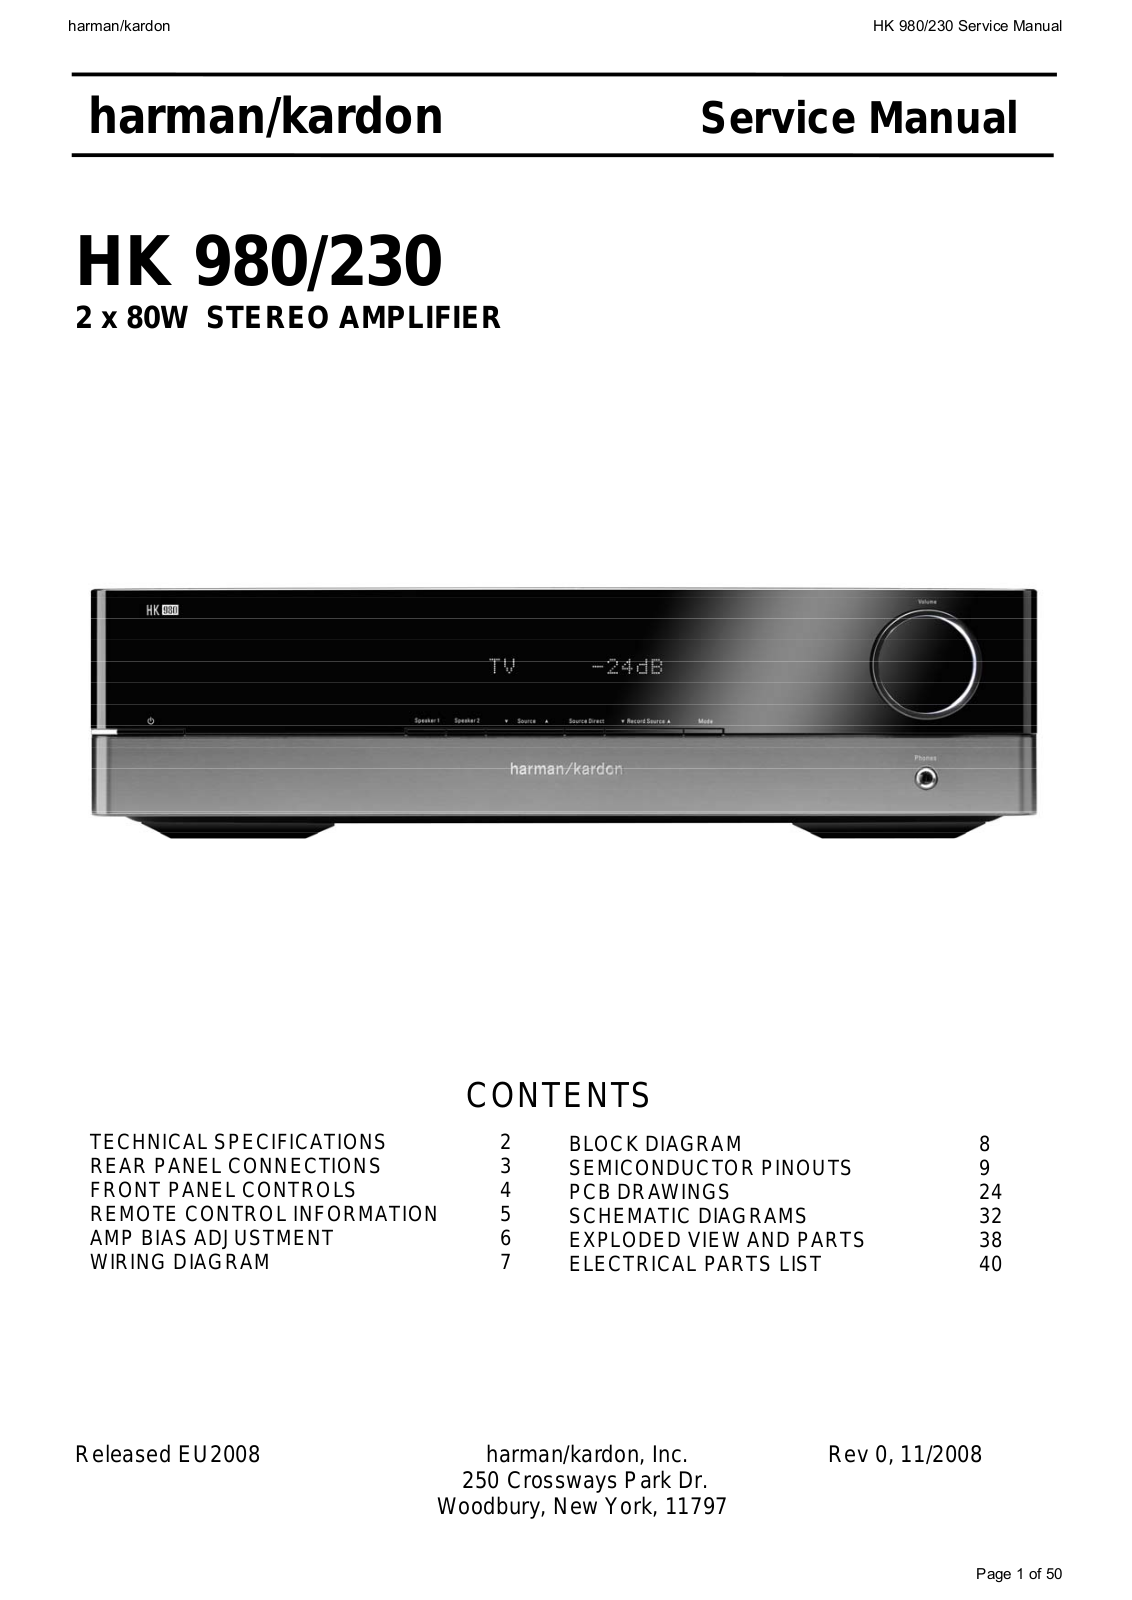 Harman Kardon HK-230, HK-980 Service manual